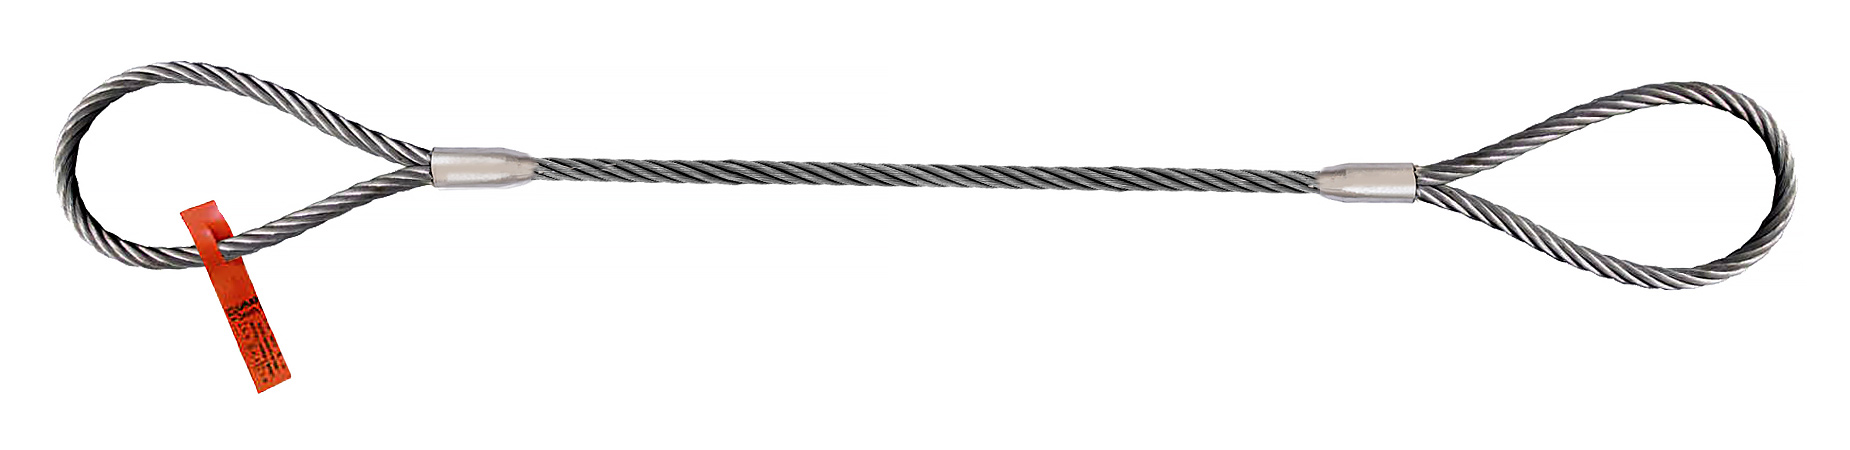 Vertical Wire Rope 8 Length Liftall 1EZEEX8 Sling 13800 lb 